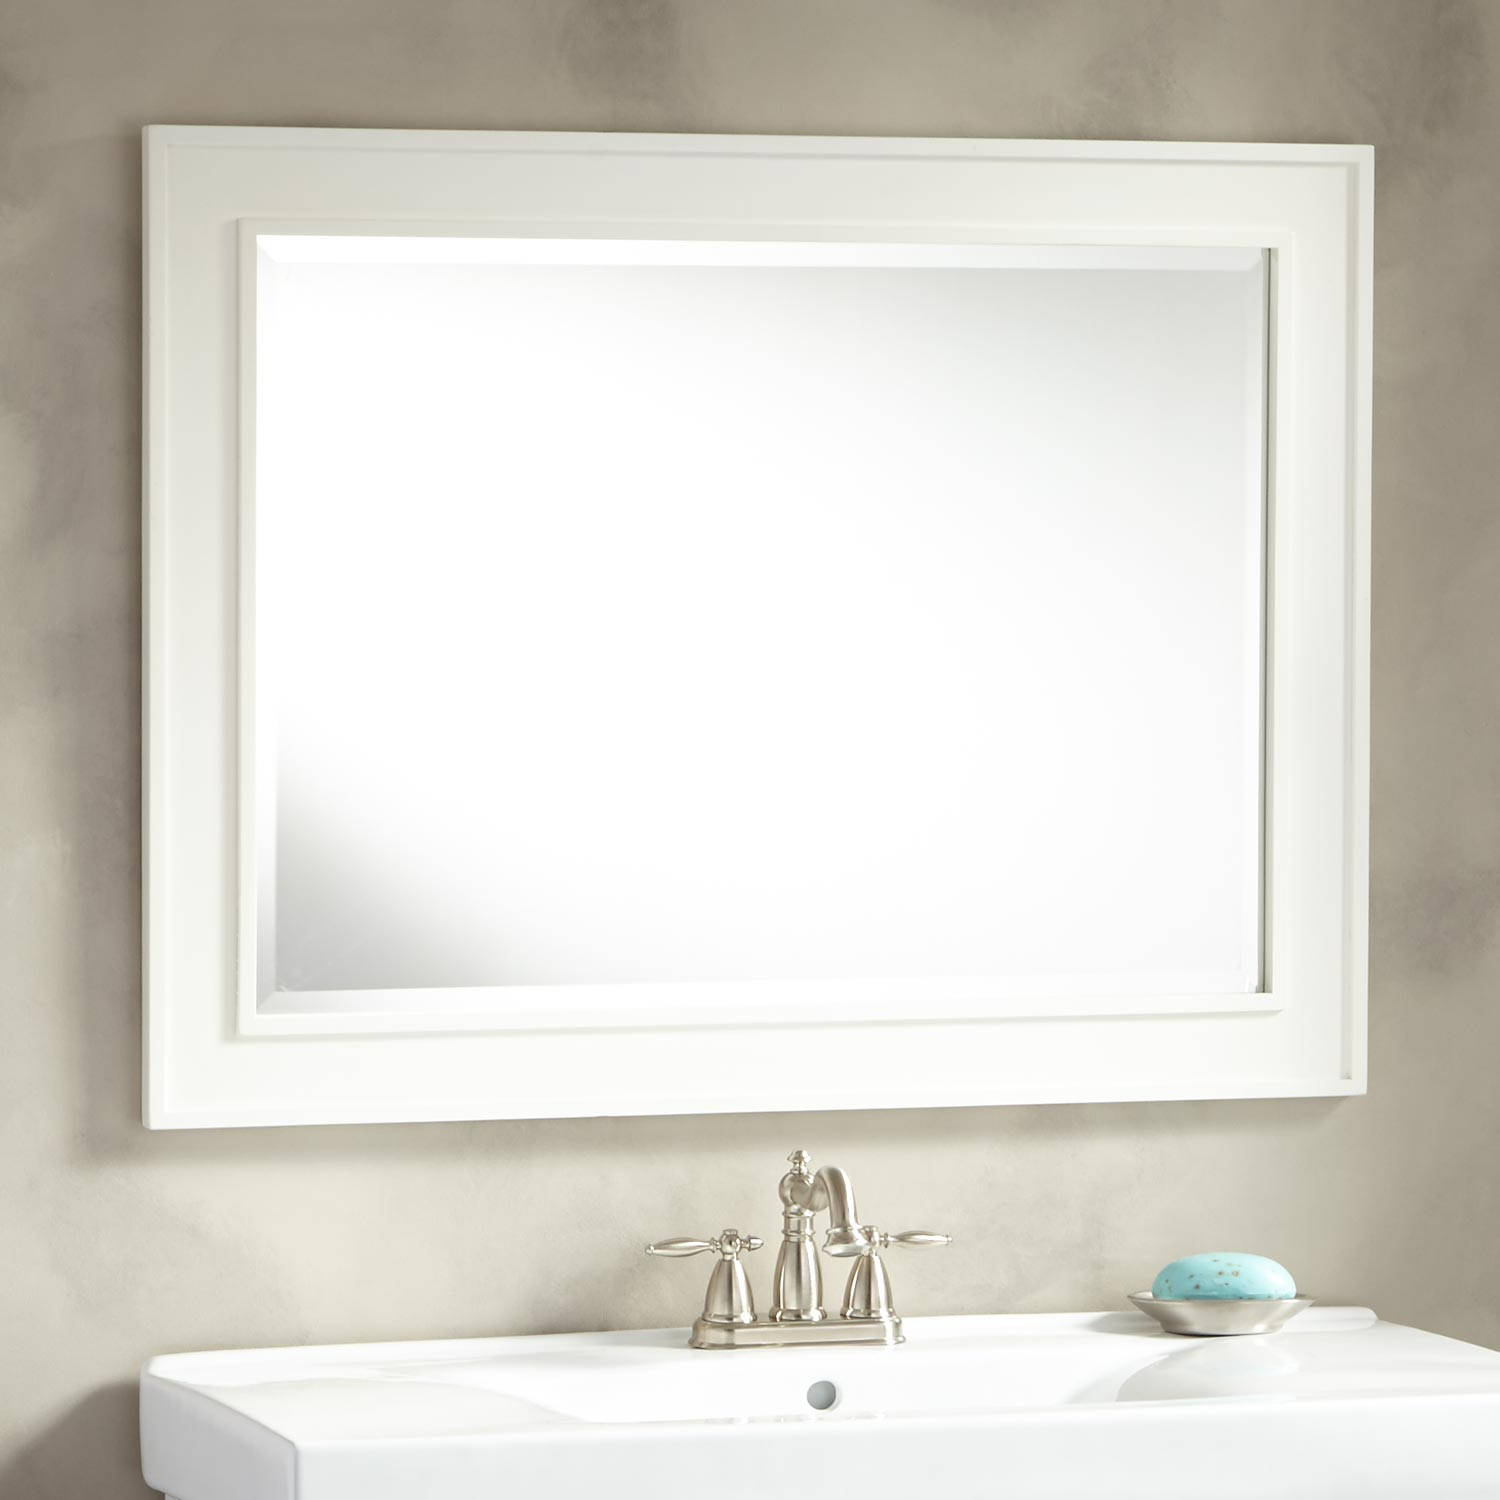 White Framed Bathroom Mirrors
 Bathroom Framed Mirror